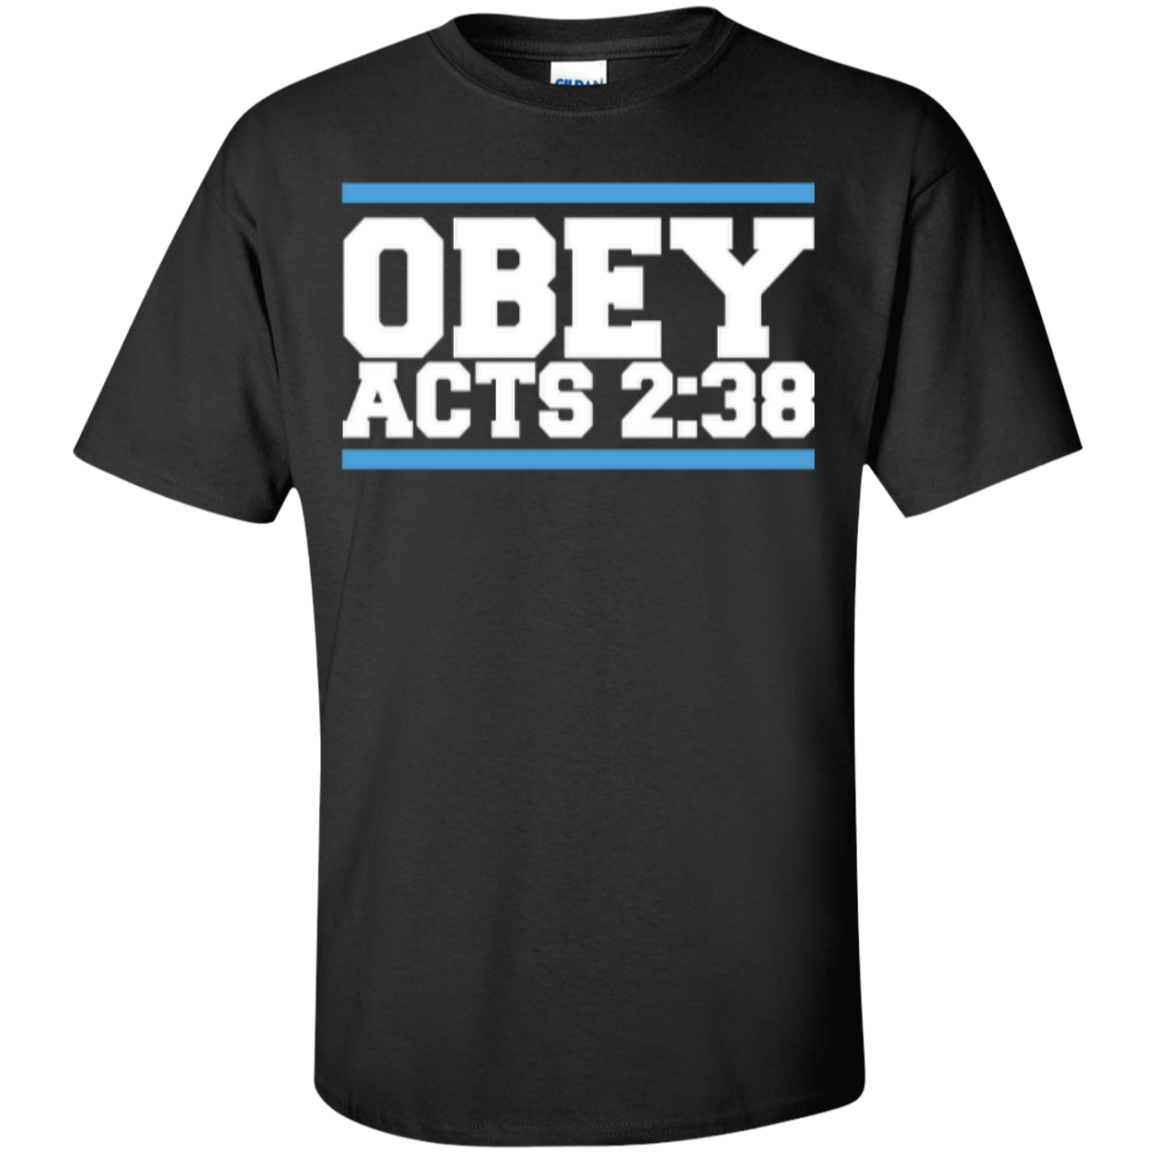 Obey Acts 2:38 - Cotton T-Shirt - Apostolic Wear - Kick Merch - 1